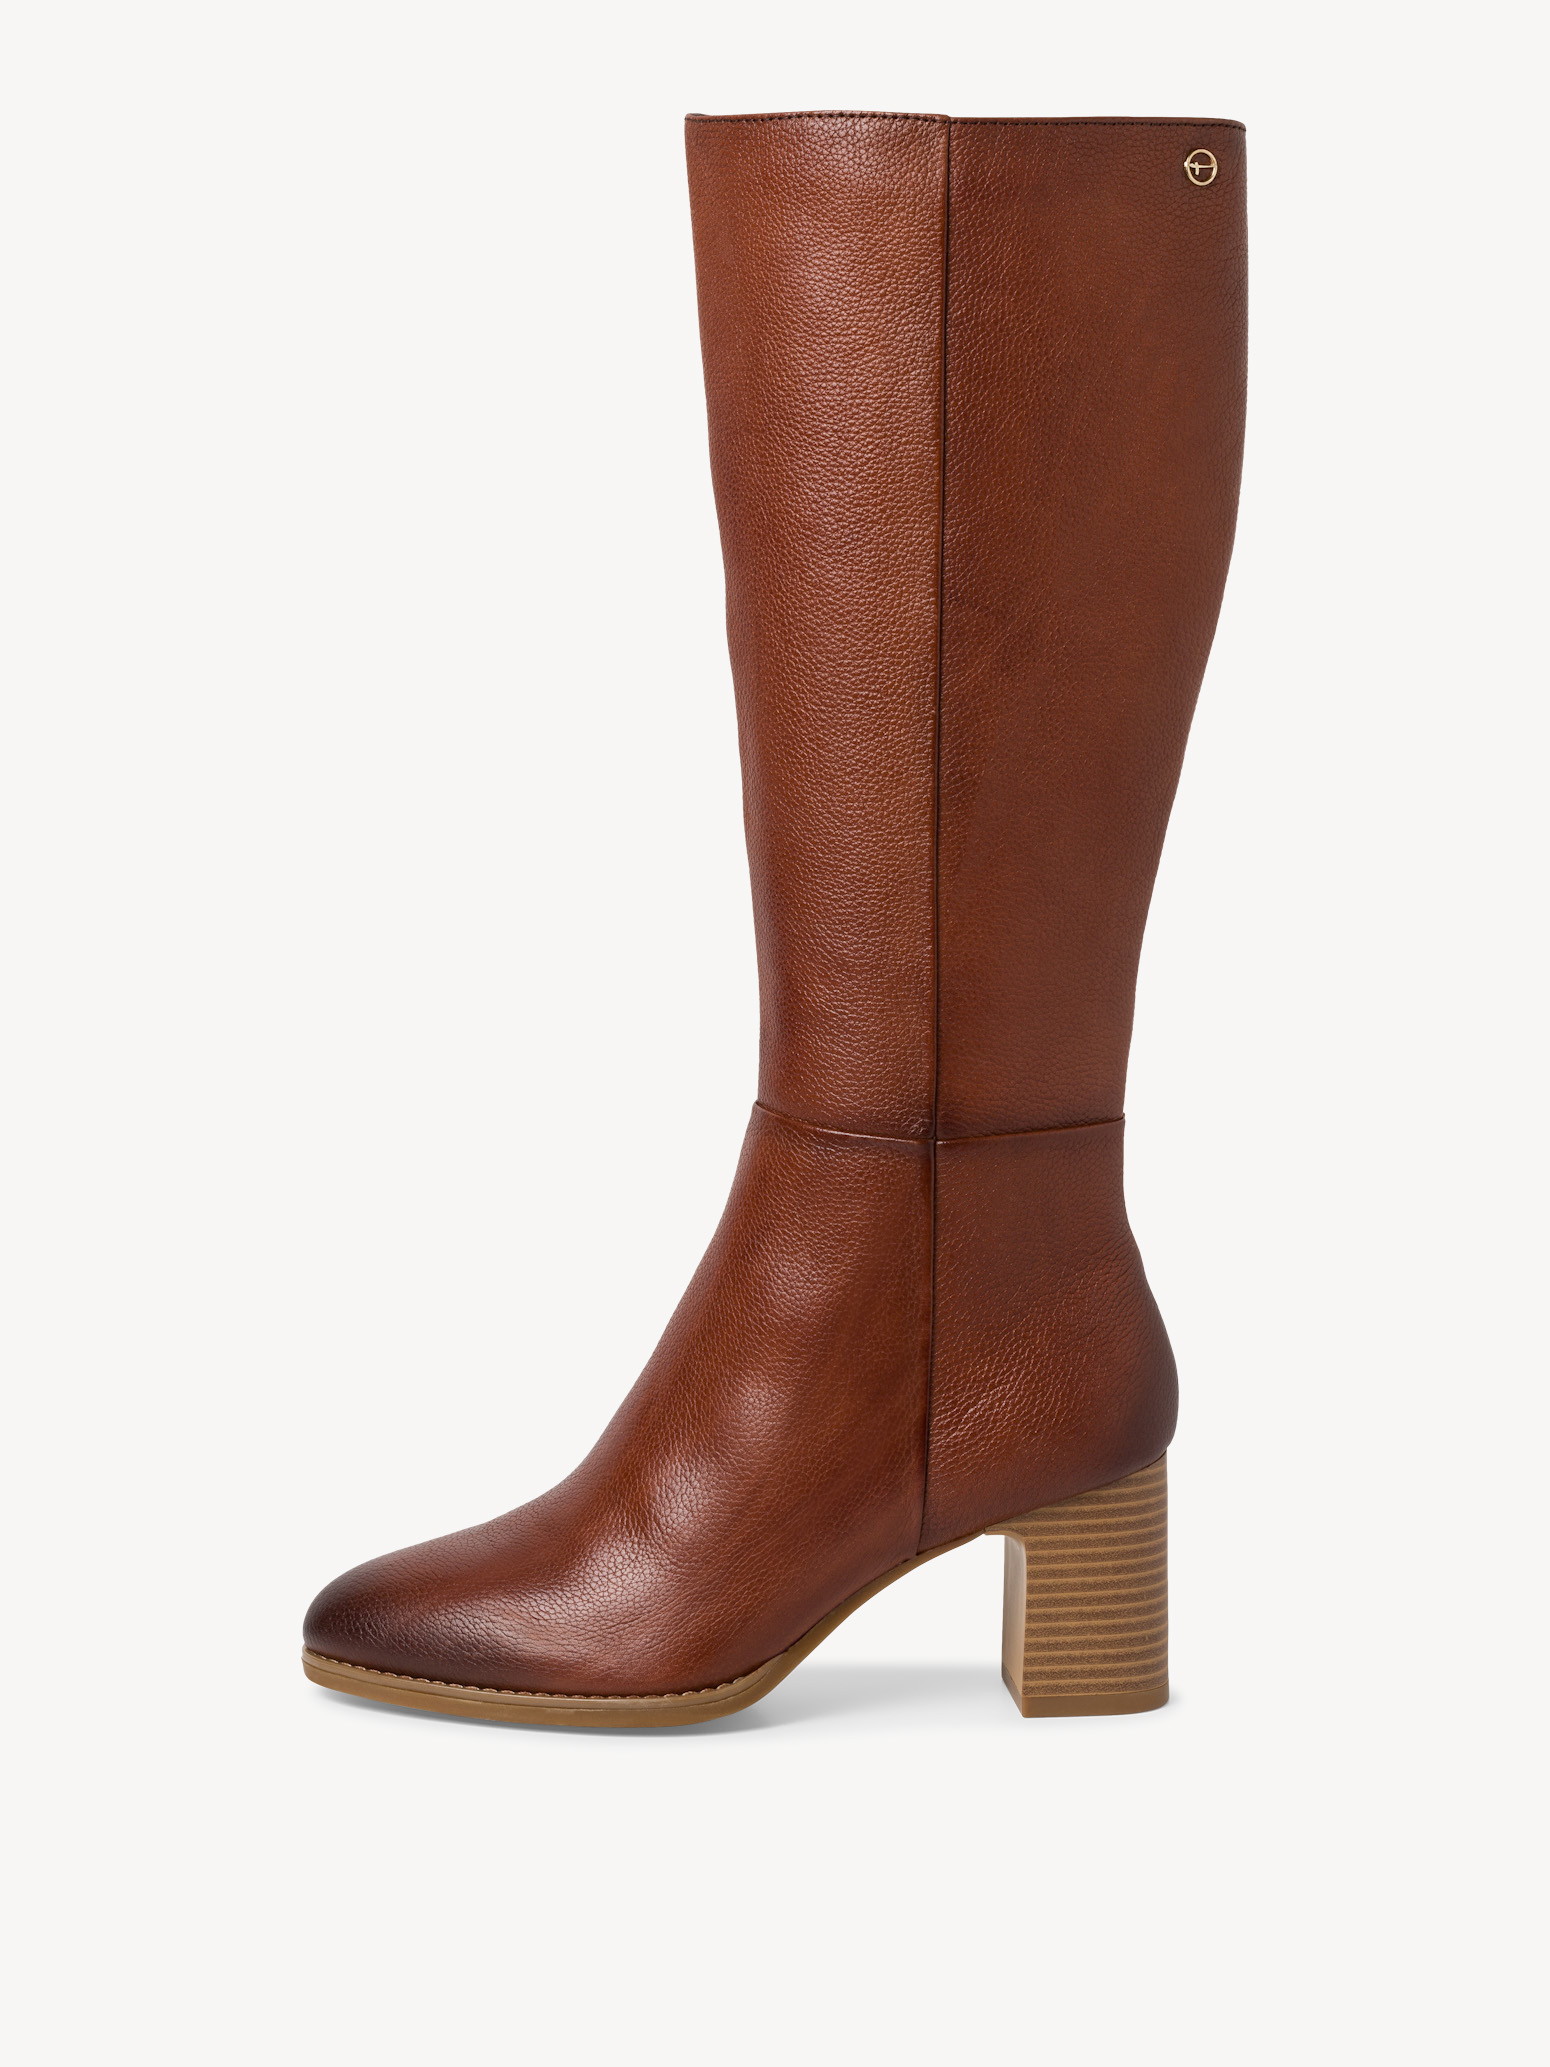 Frye Womens Slip On Block Heel Knee High Boots Brown Leather Size 7B - Shop  Linda's Stuff